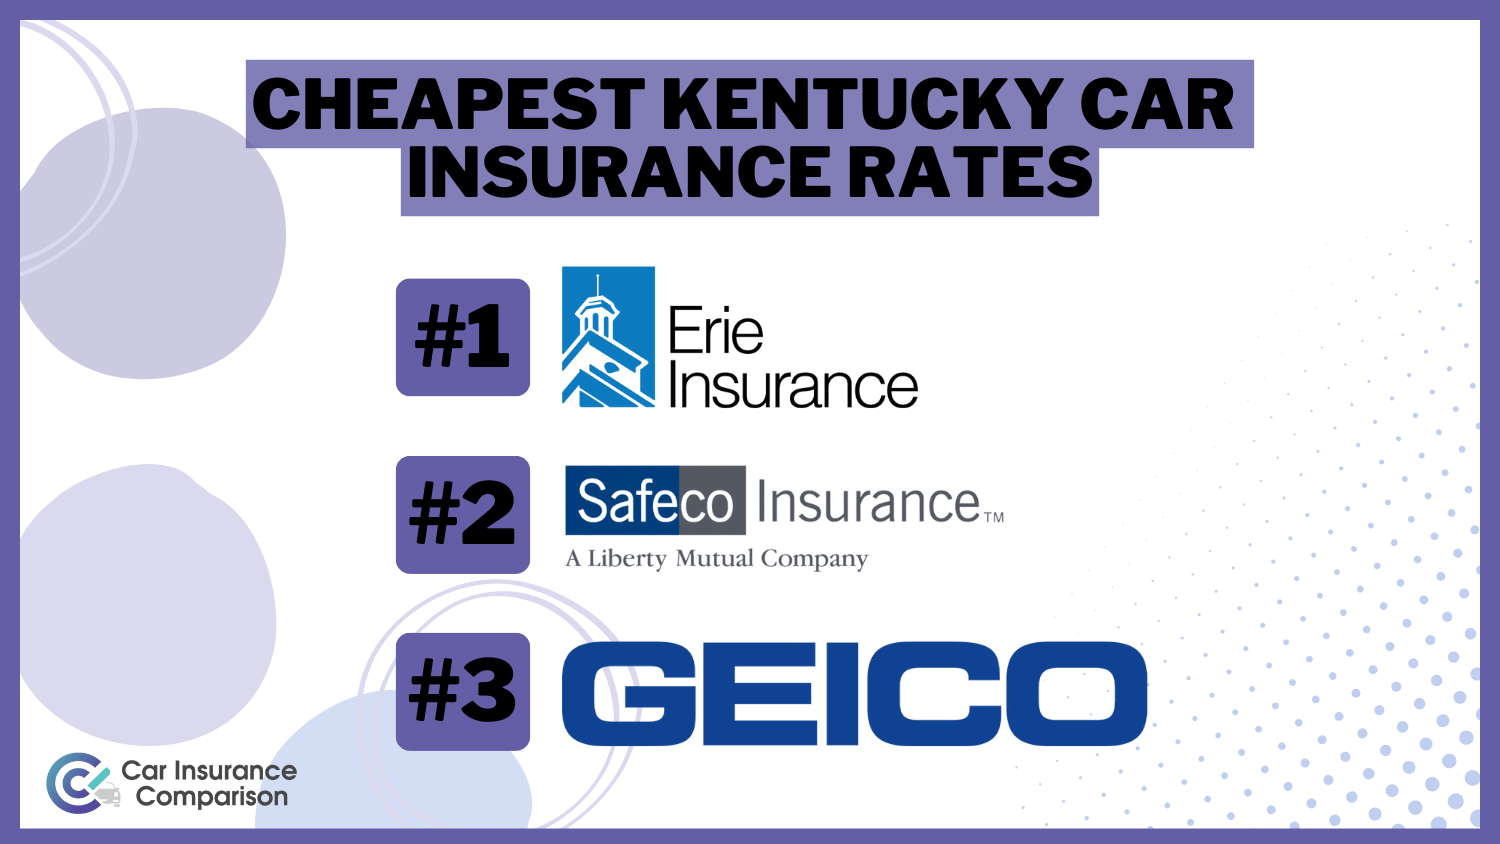 Cheapest Kentucky Car Insurance Rates: Erie, Safeco, Geico